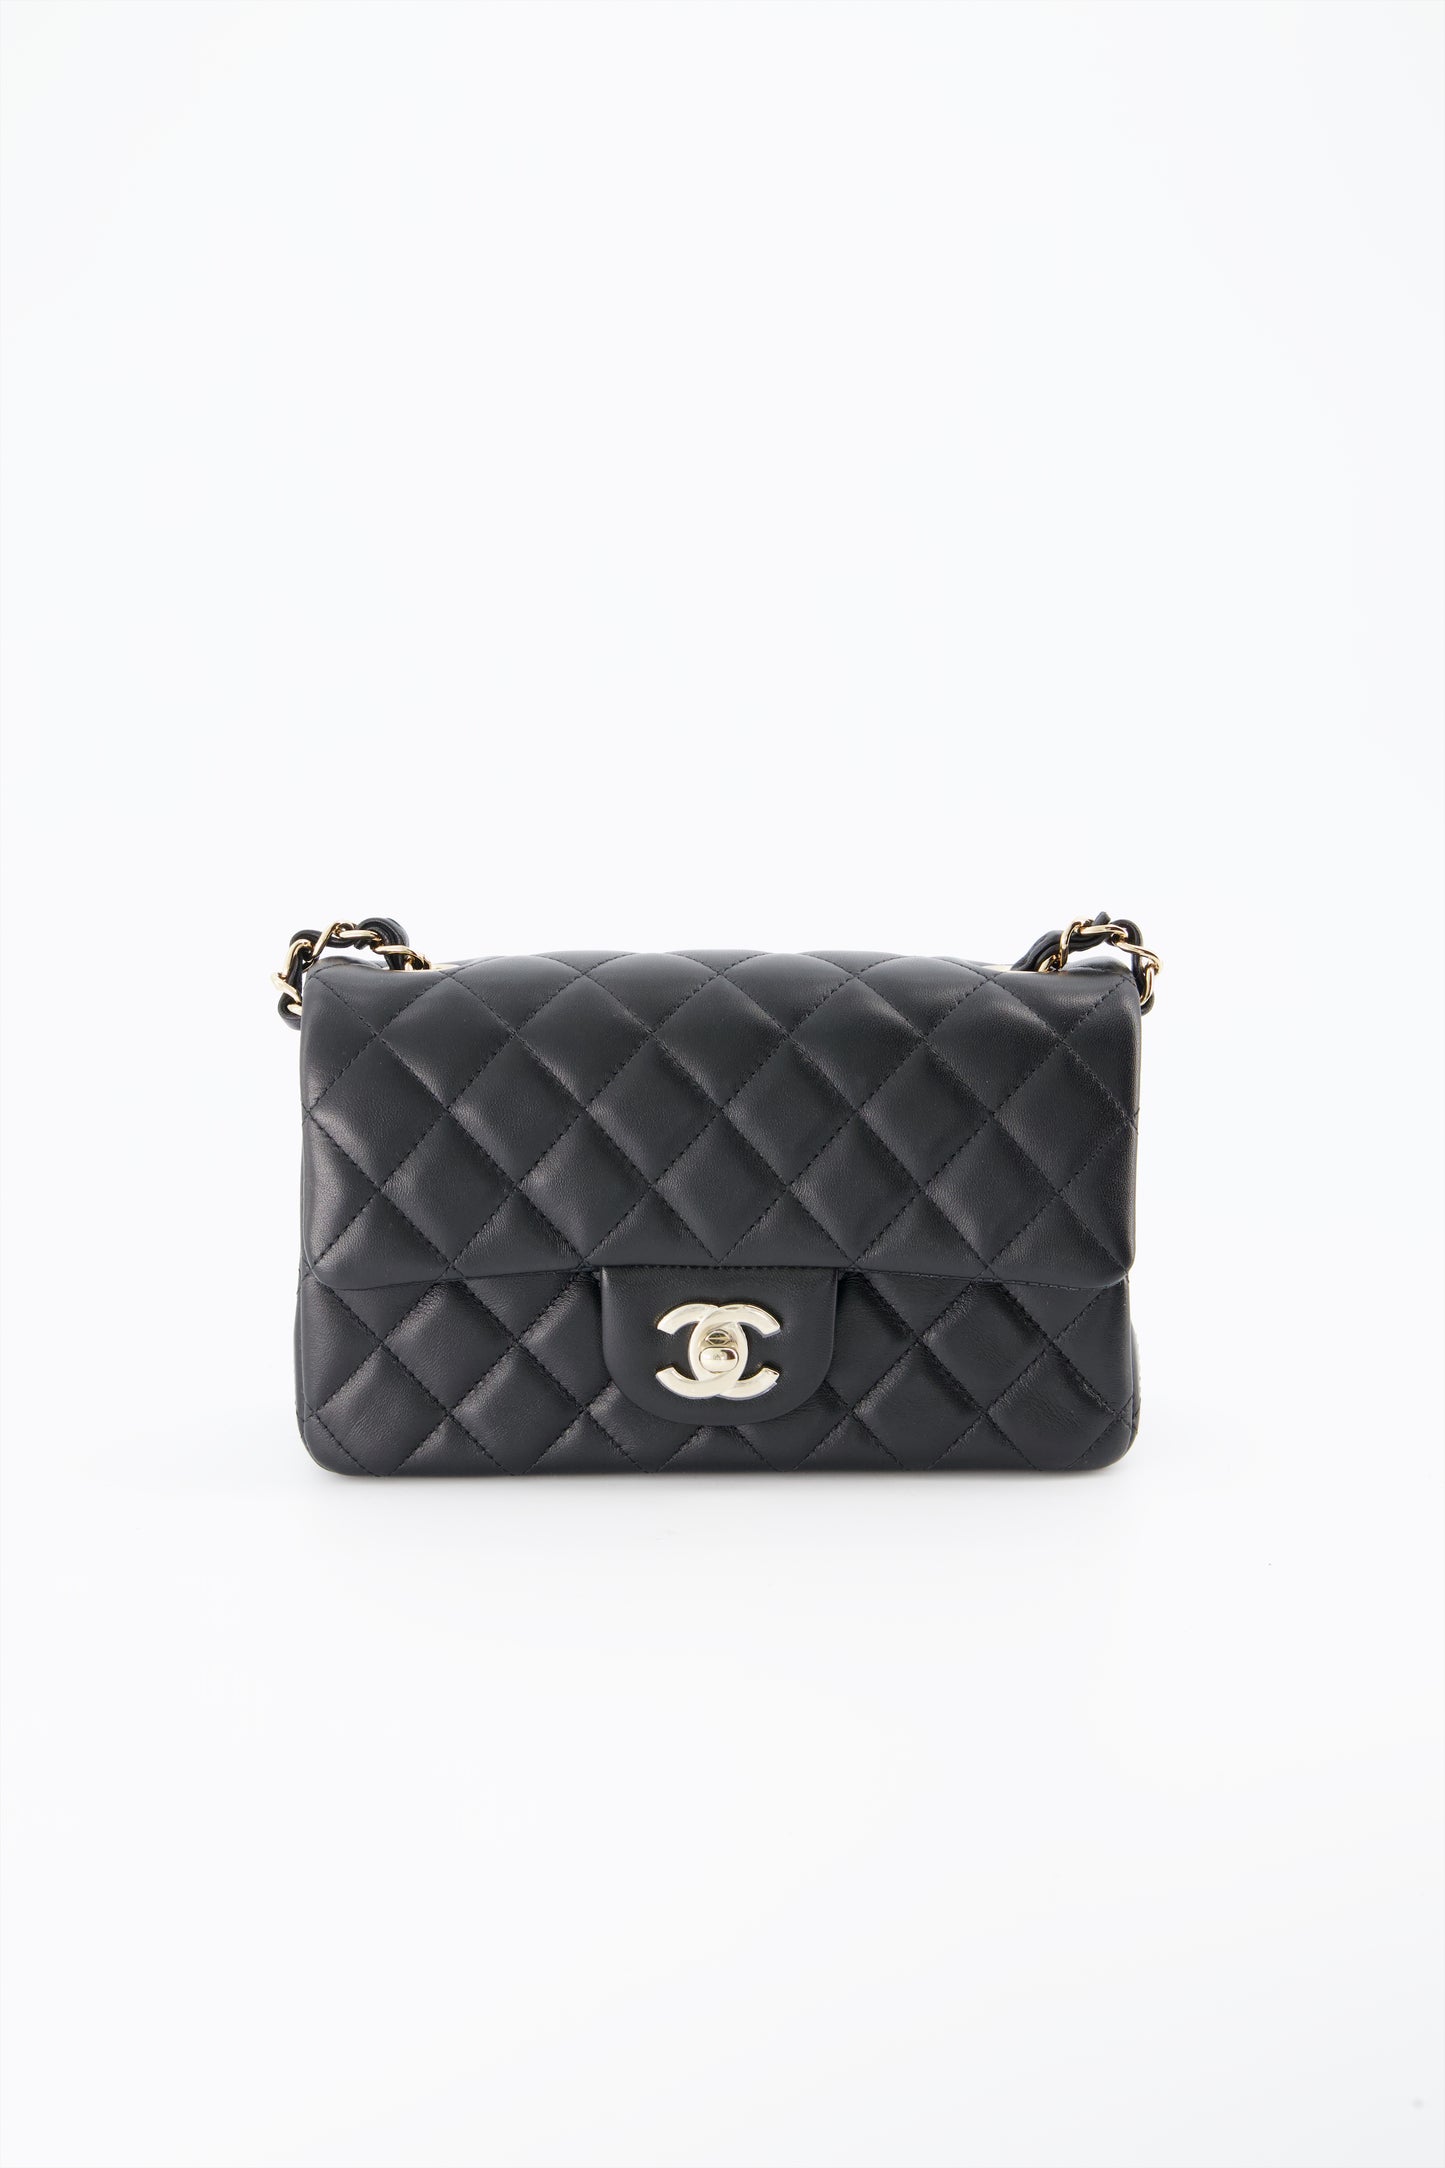 Chanel Small Single Flap Bag